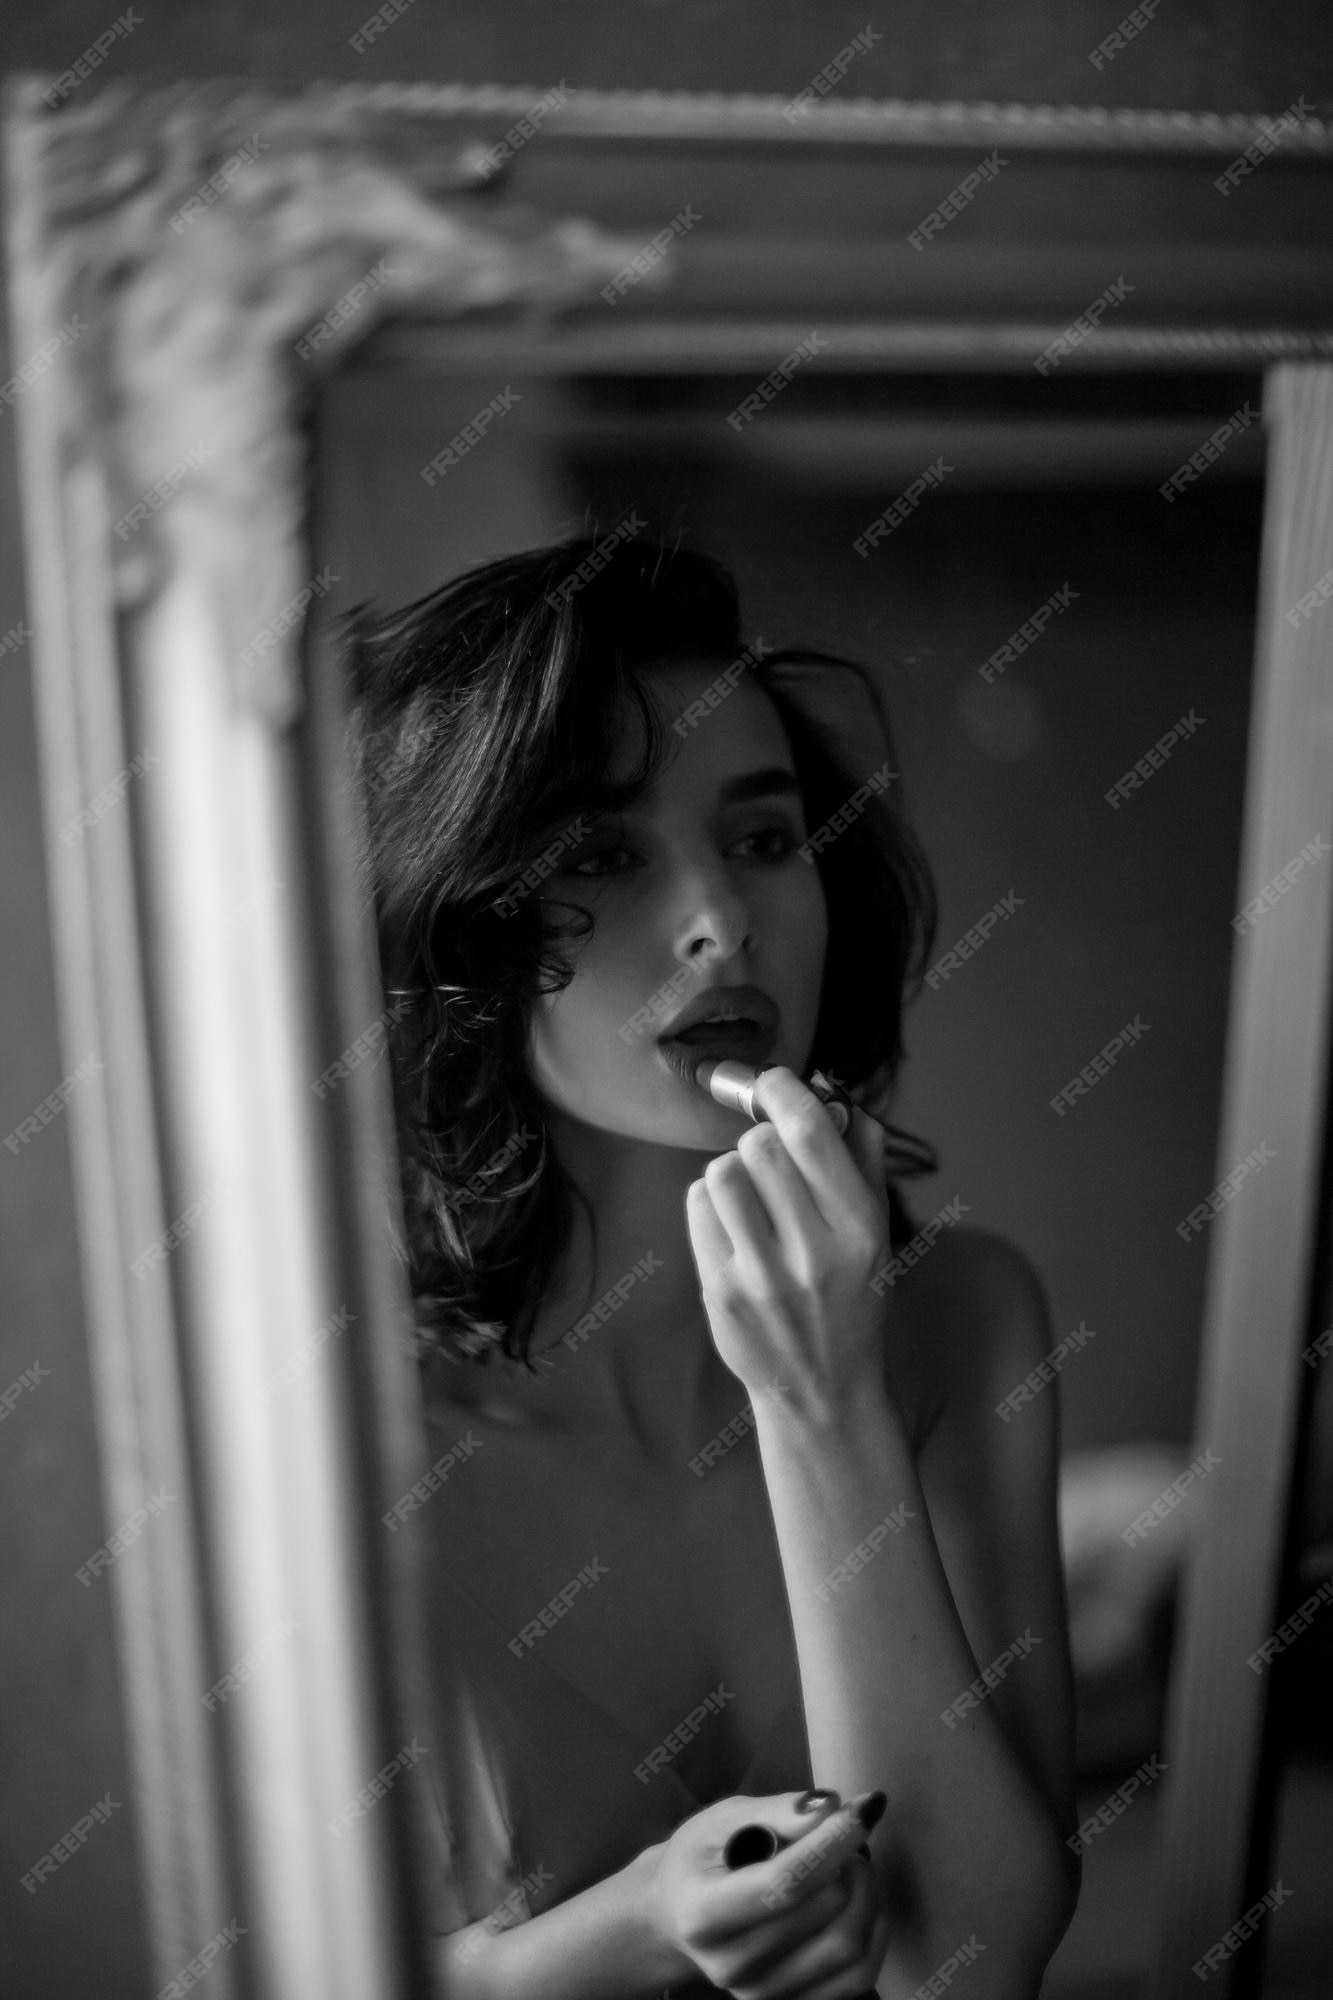 corey doyle share sexy black and white photography photos